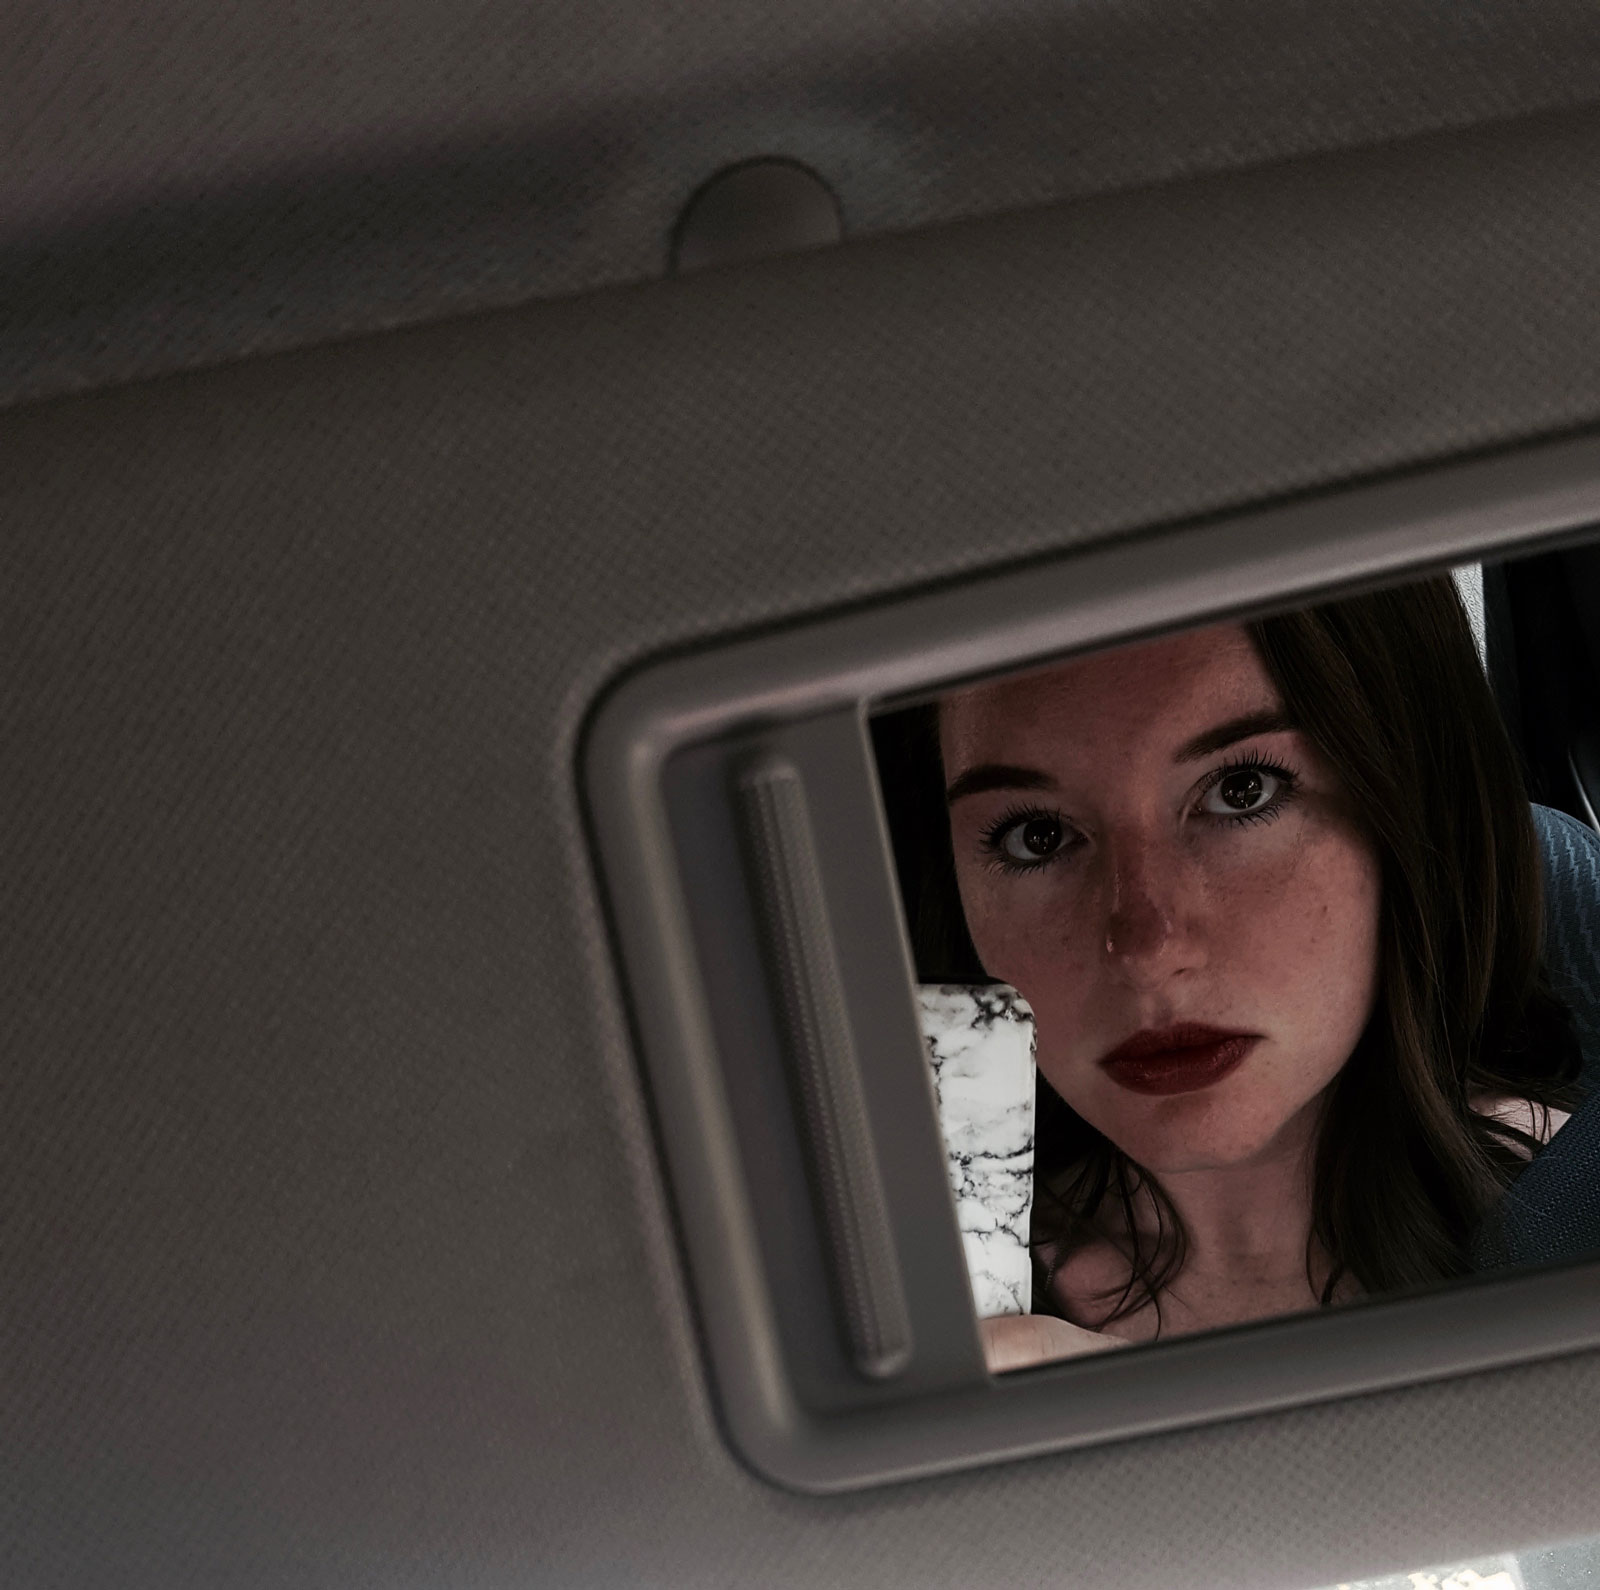 Alyssa is wearing an Ilia Lipstick in the car mirror